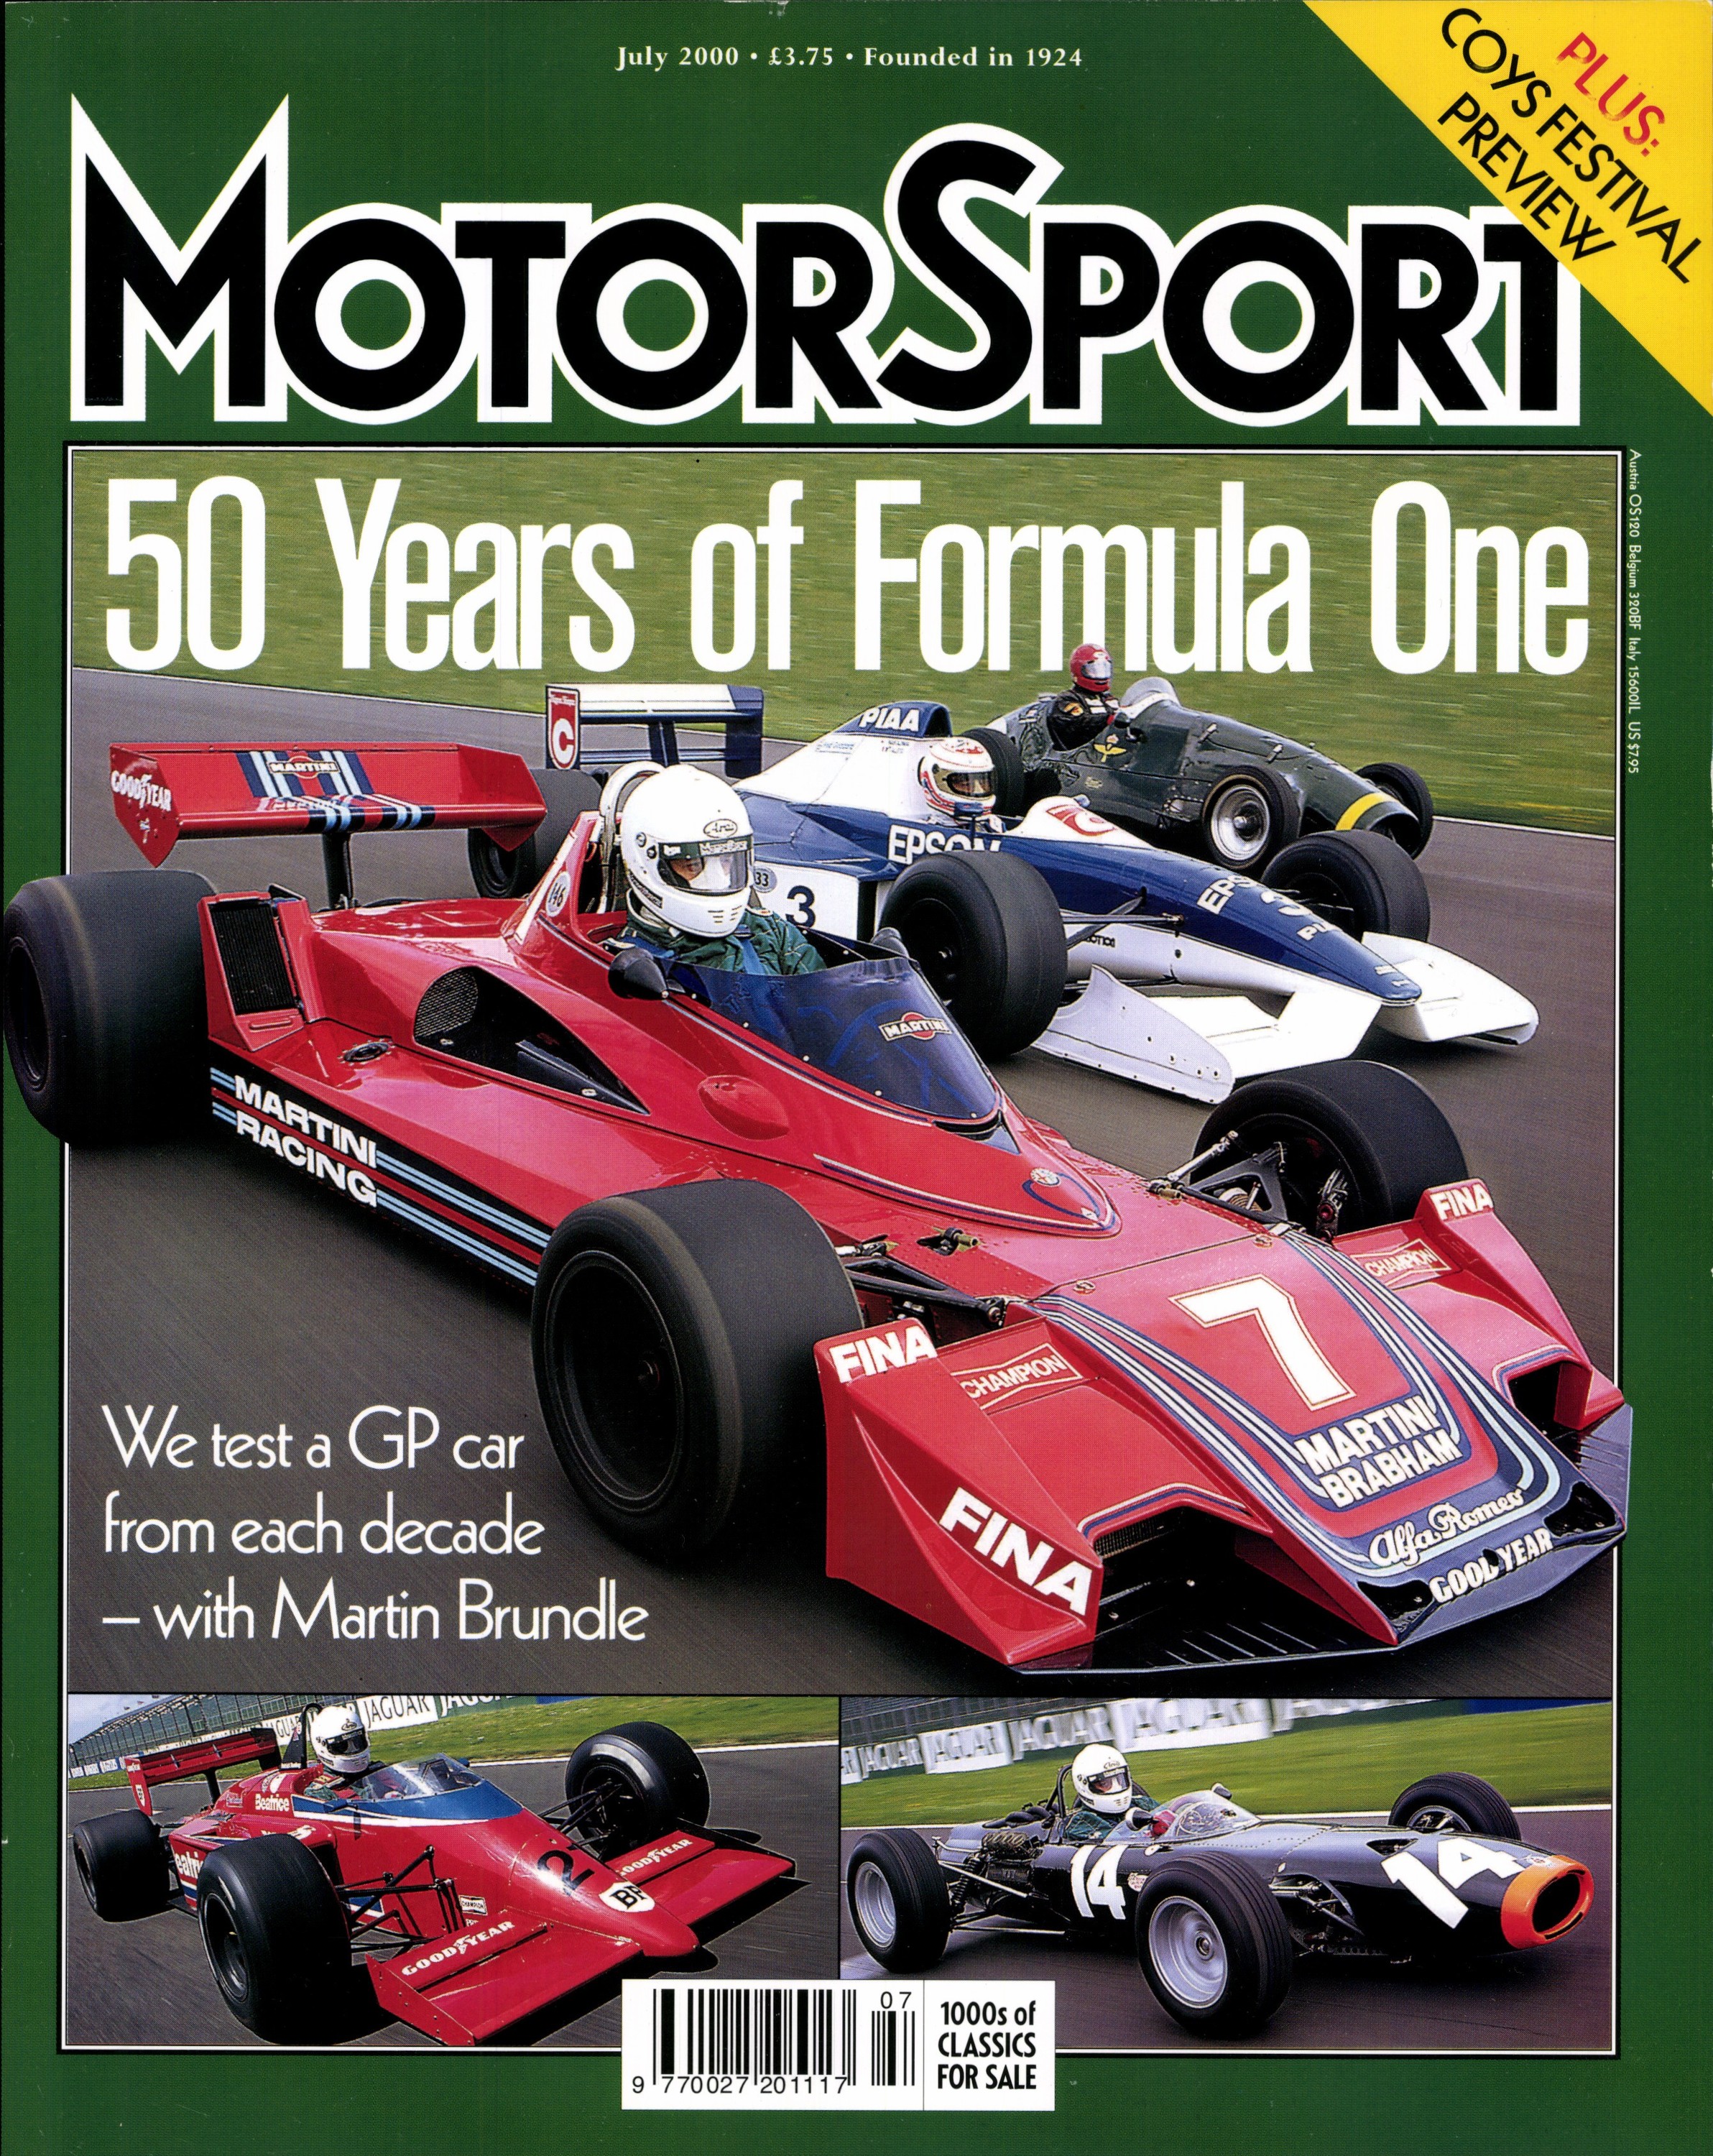 https://media.motorsportmagazine.com/archive/july-2000/full/1.jpg